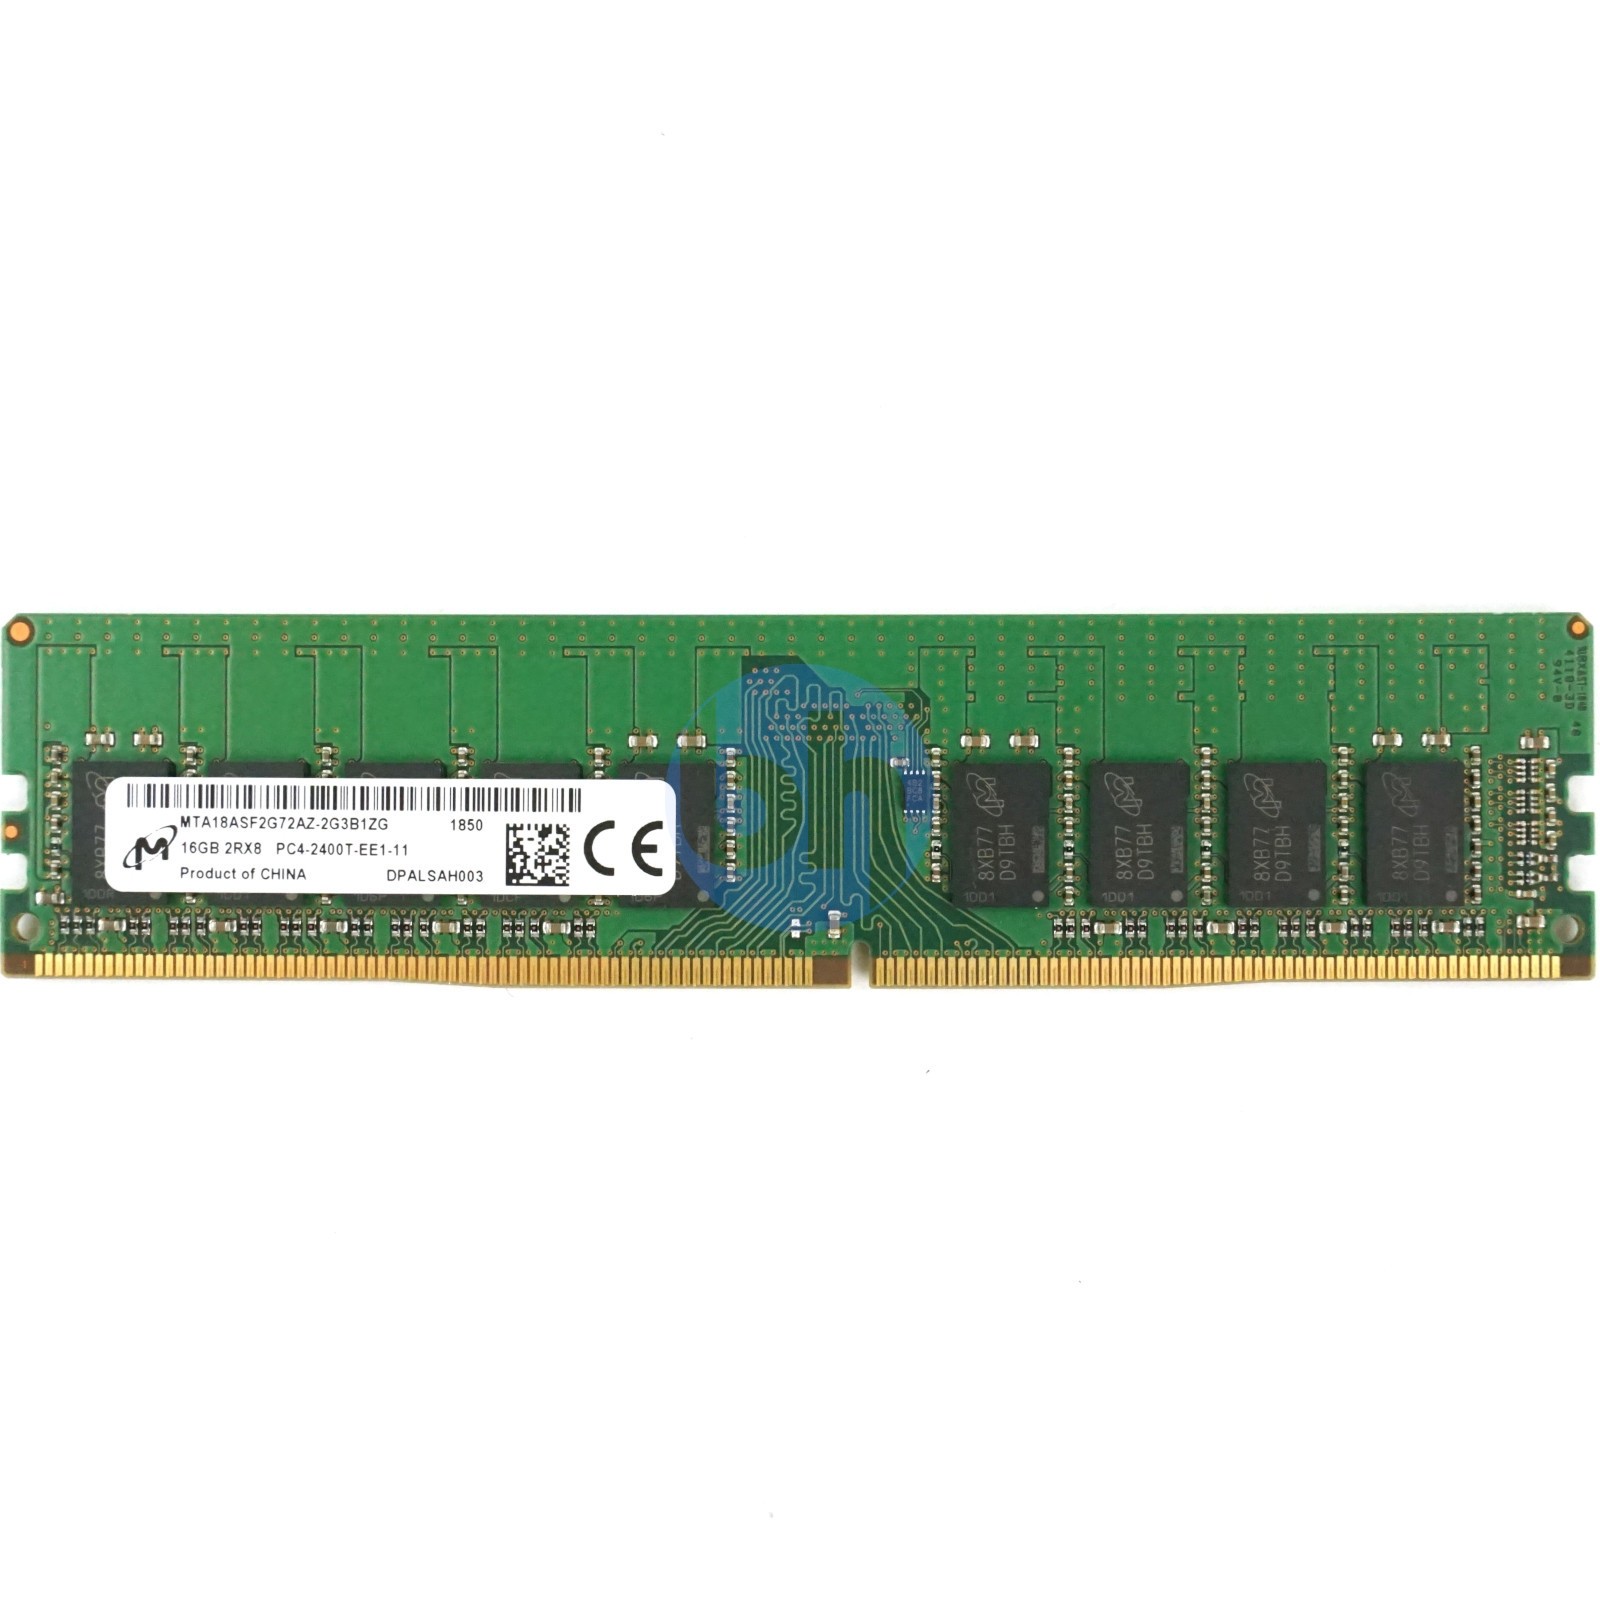 Micron - 16GB PC4-19200T-E (DDR4-2400MHz, 2RX8) ECC Unbuffered RAM